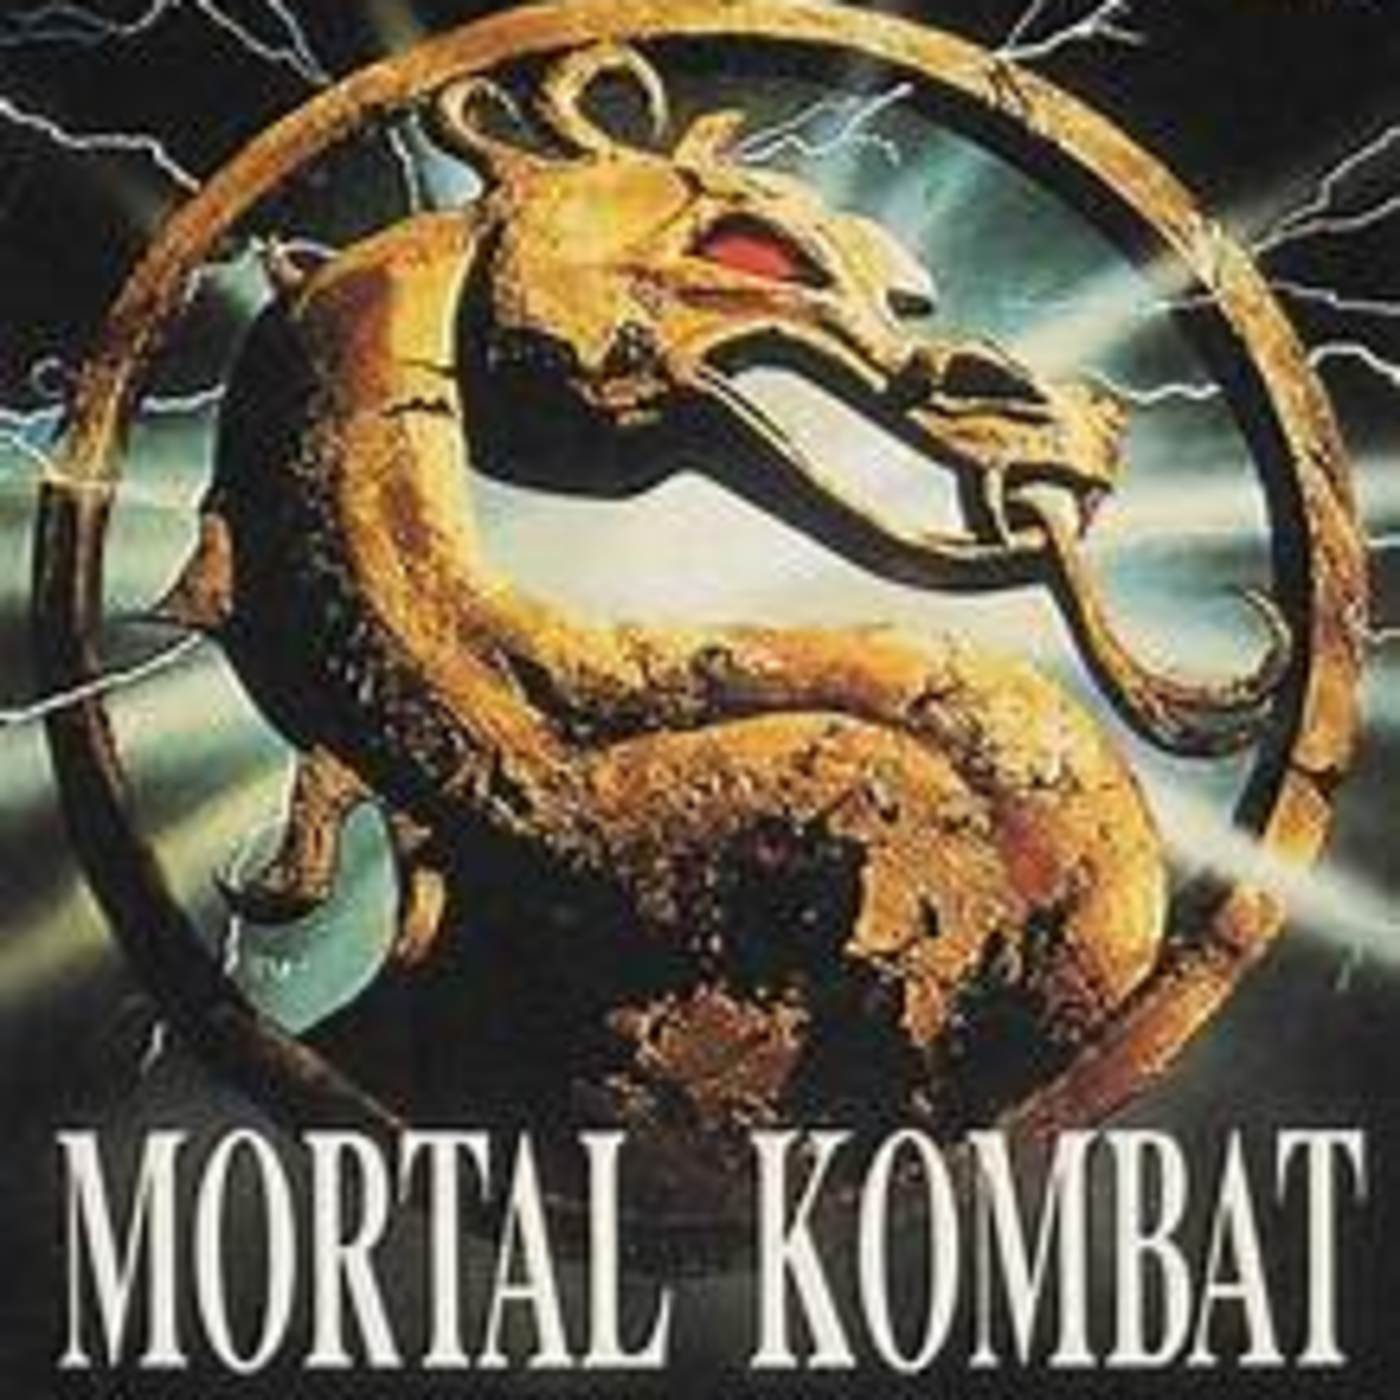 Ten Years Gone(or so): Mortal Kombat Full movie cast